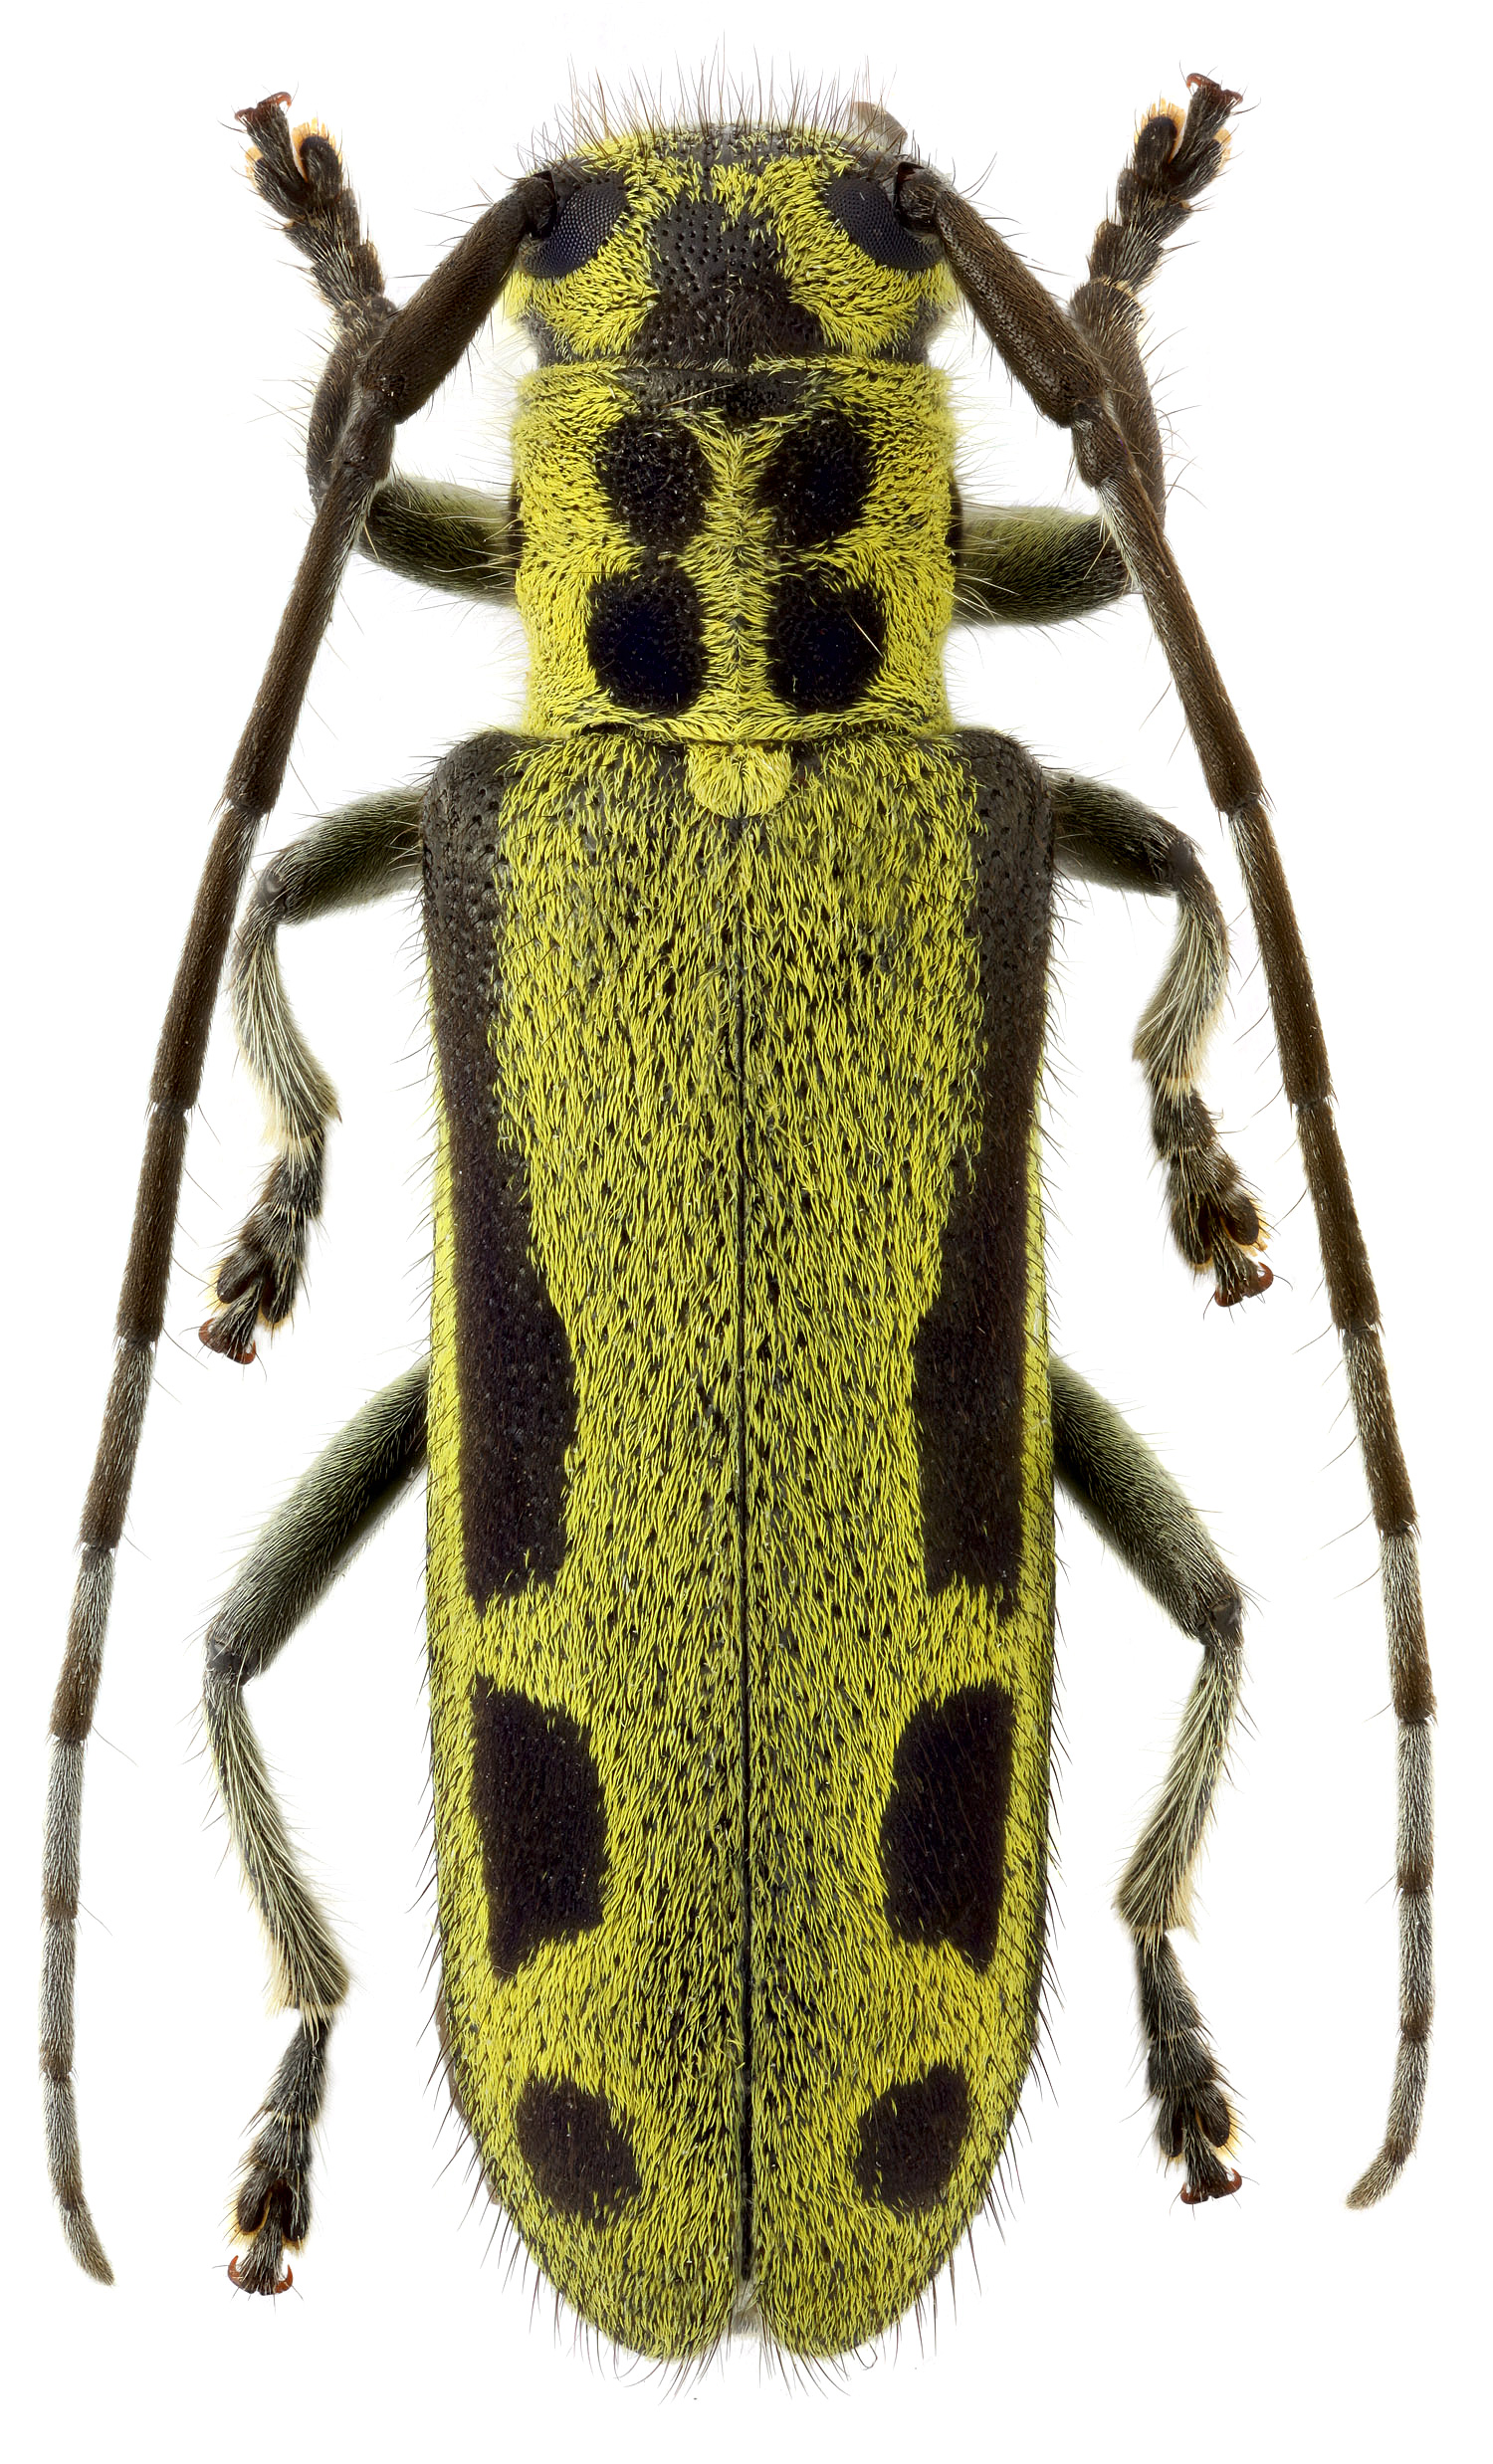 Cerambycidae: Saperda interrupta Gebl. | Nature's Jewels | Pinterest ...